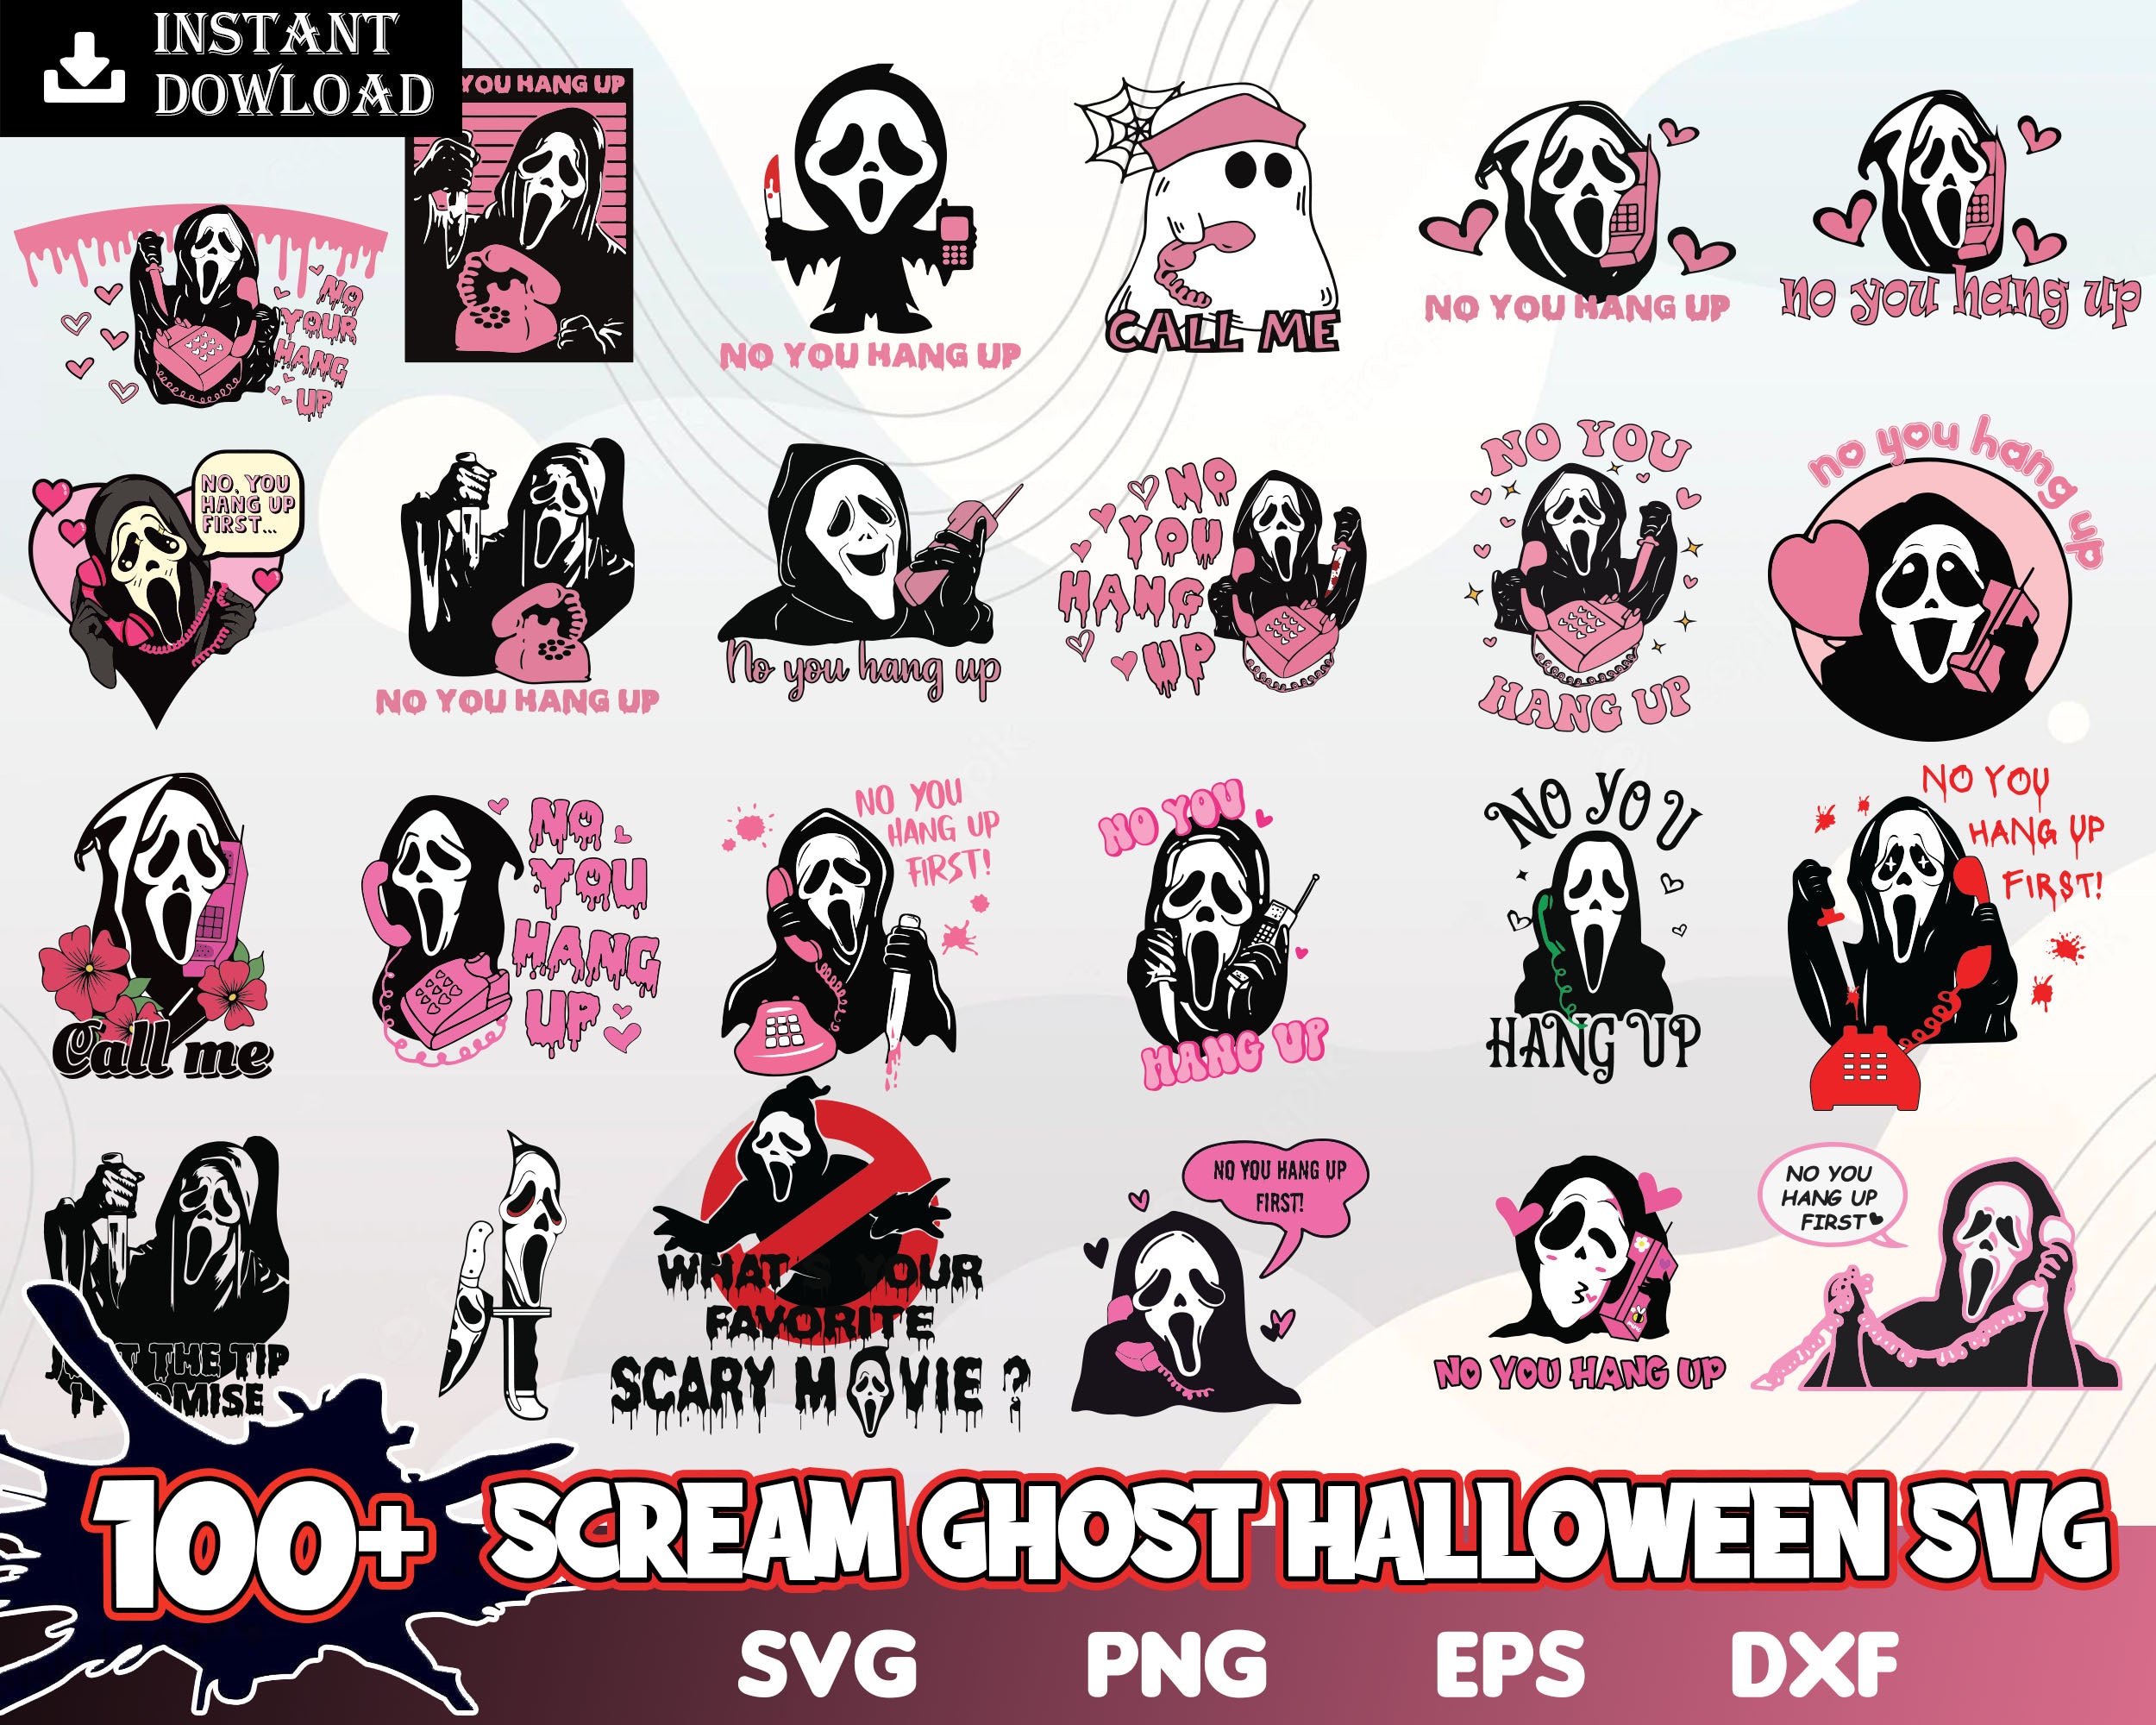 Scream ghost halloween svg, png, eps, dxf, Halloween bundle svg